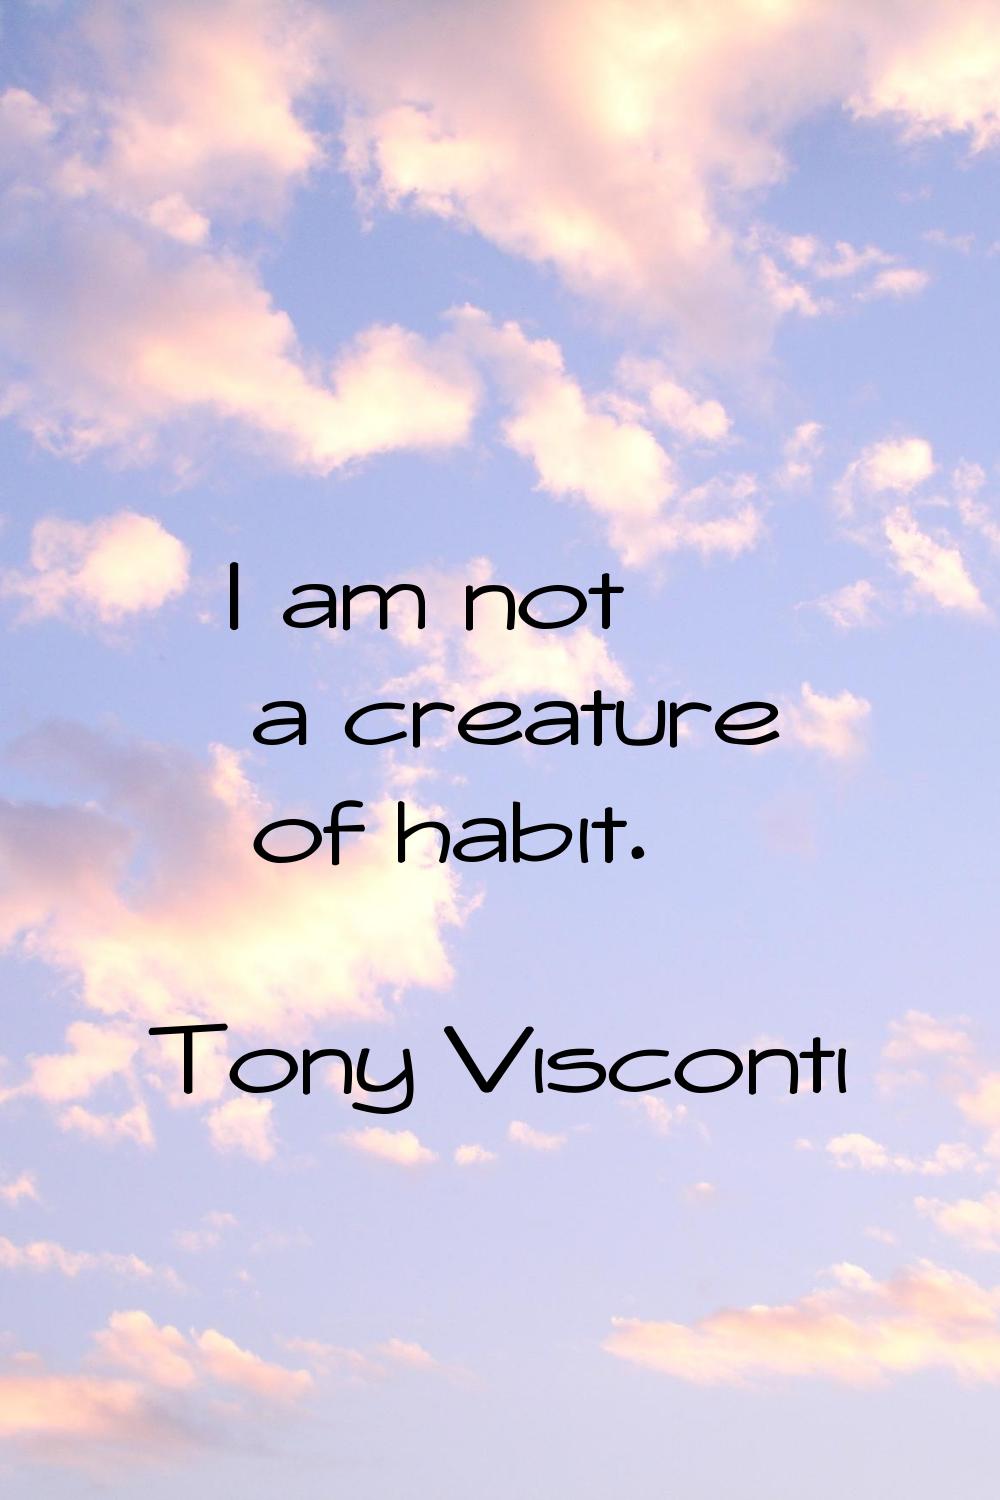 I am not a creature of habit.